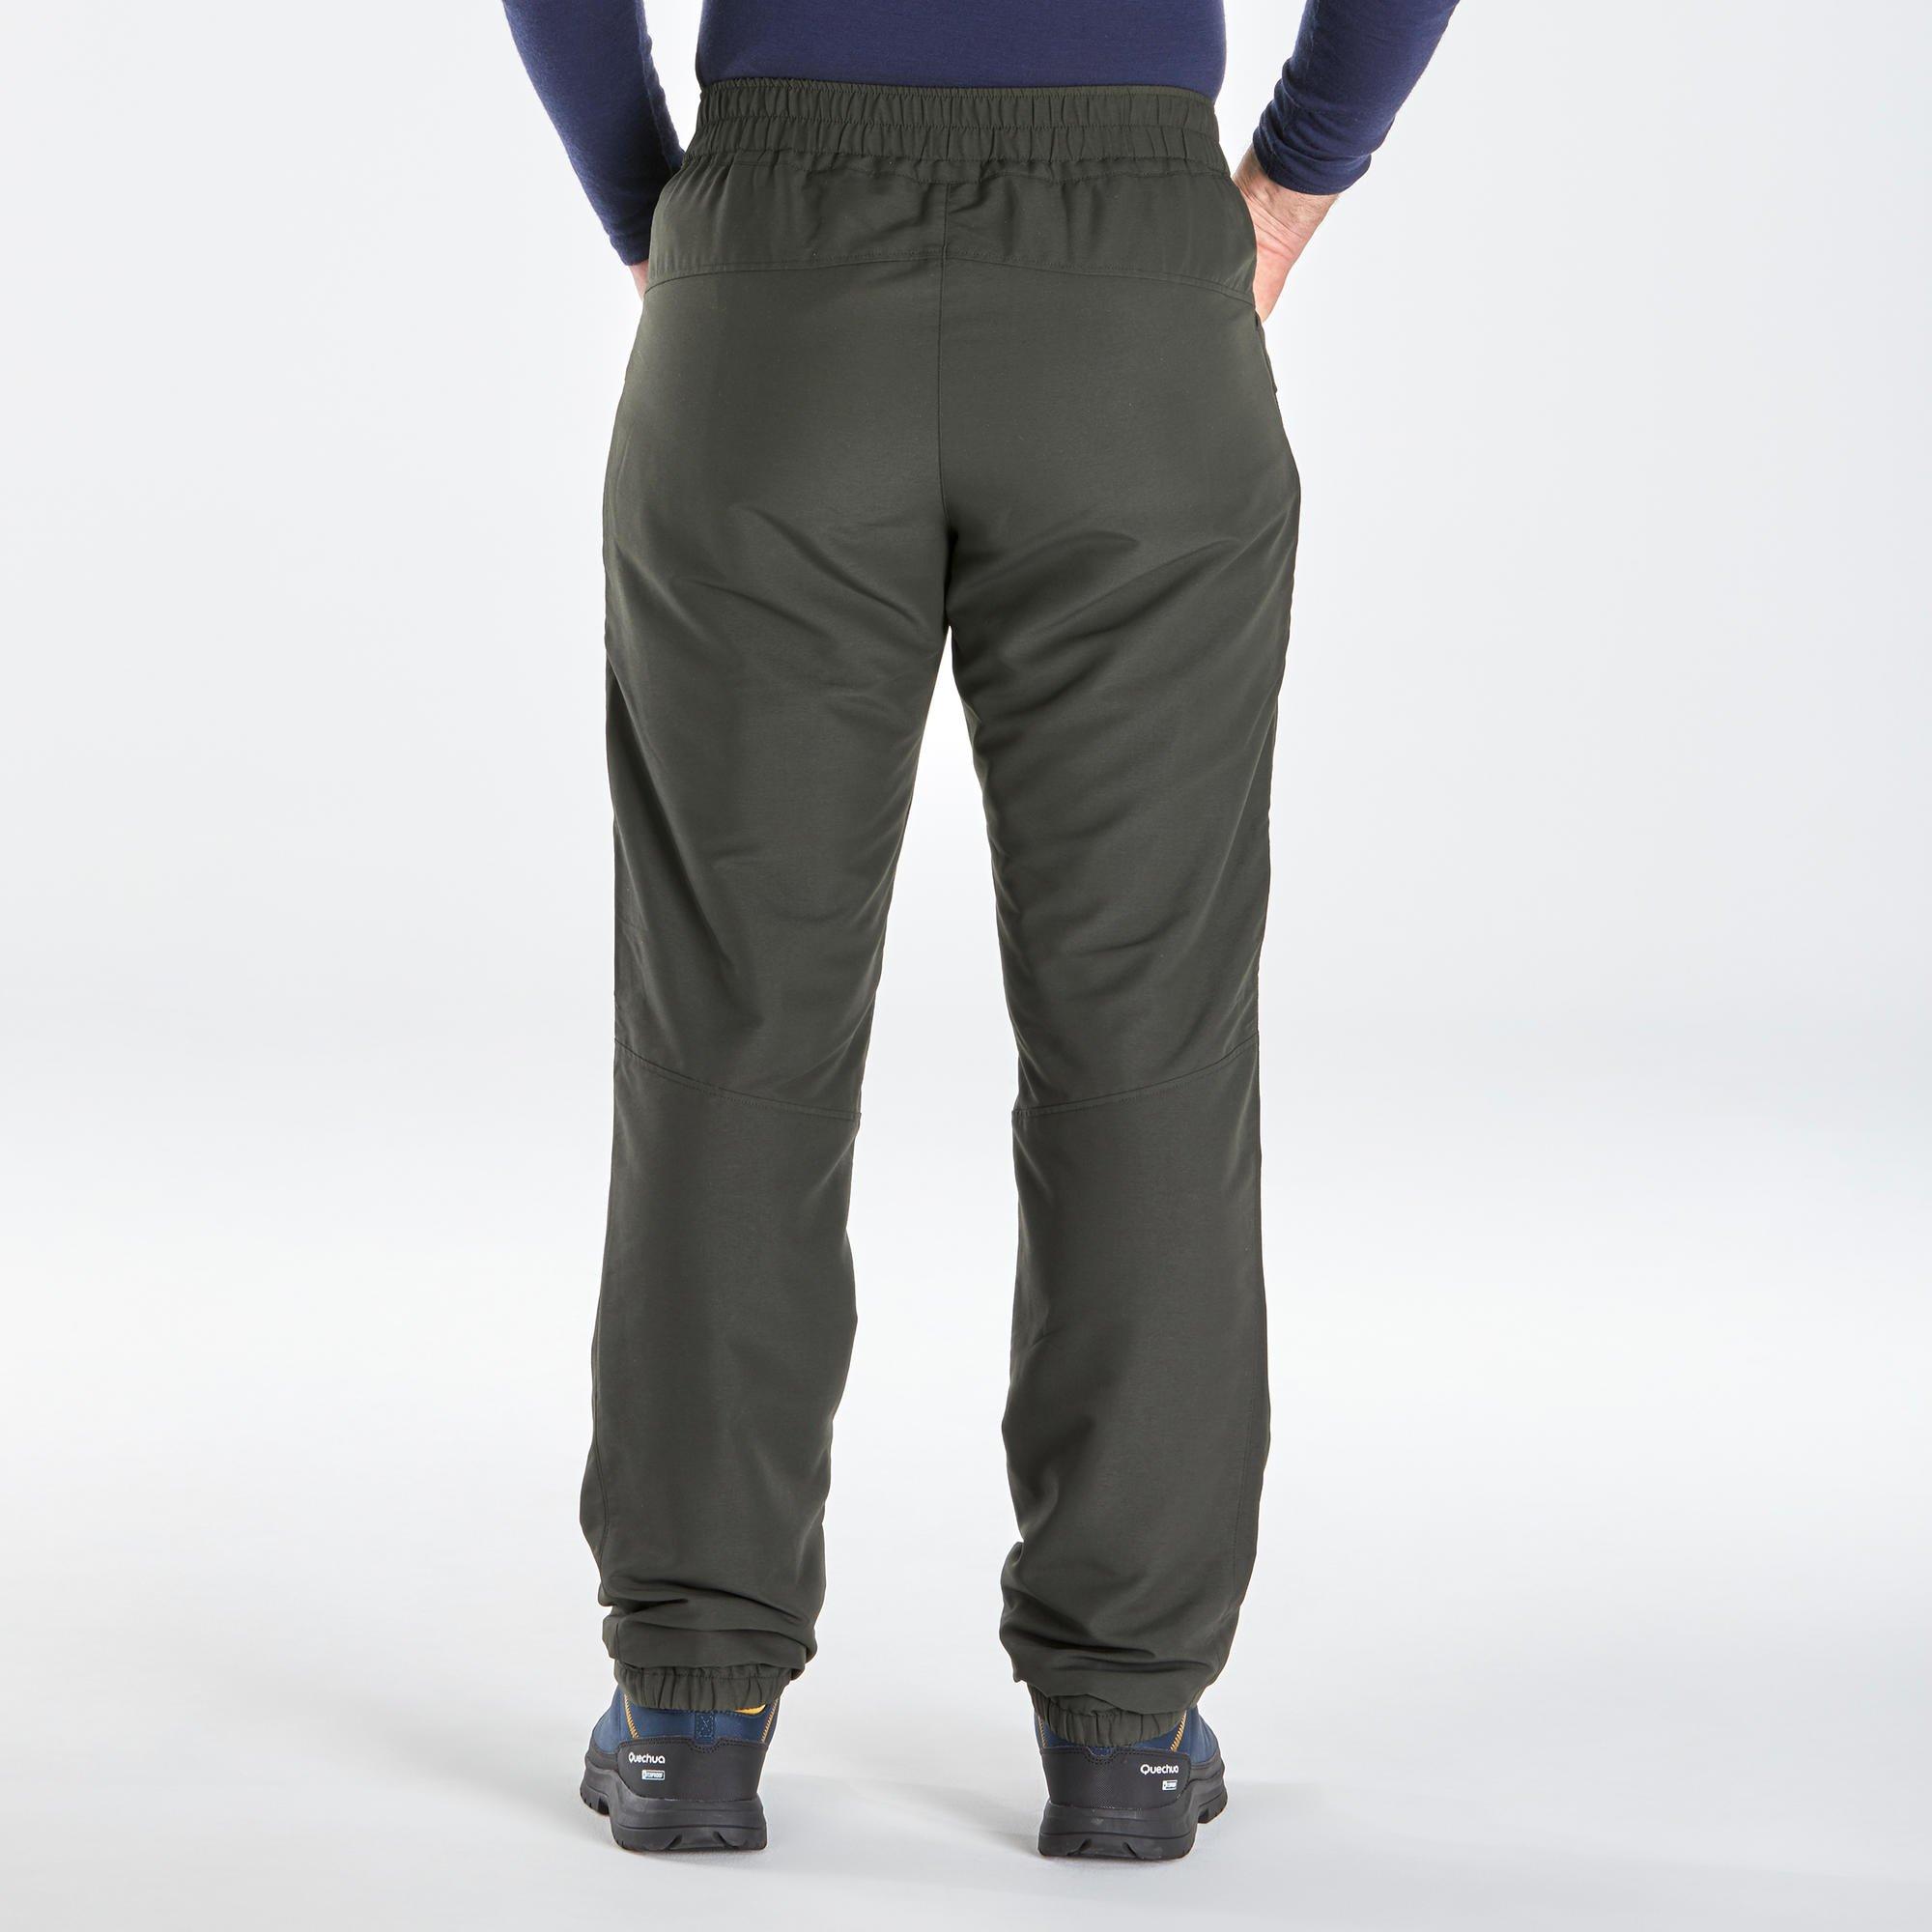 Men's Hiking Trousers MH500 QUECHUA | Decathlon